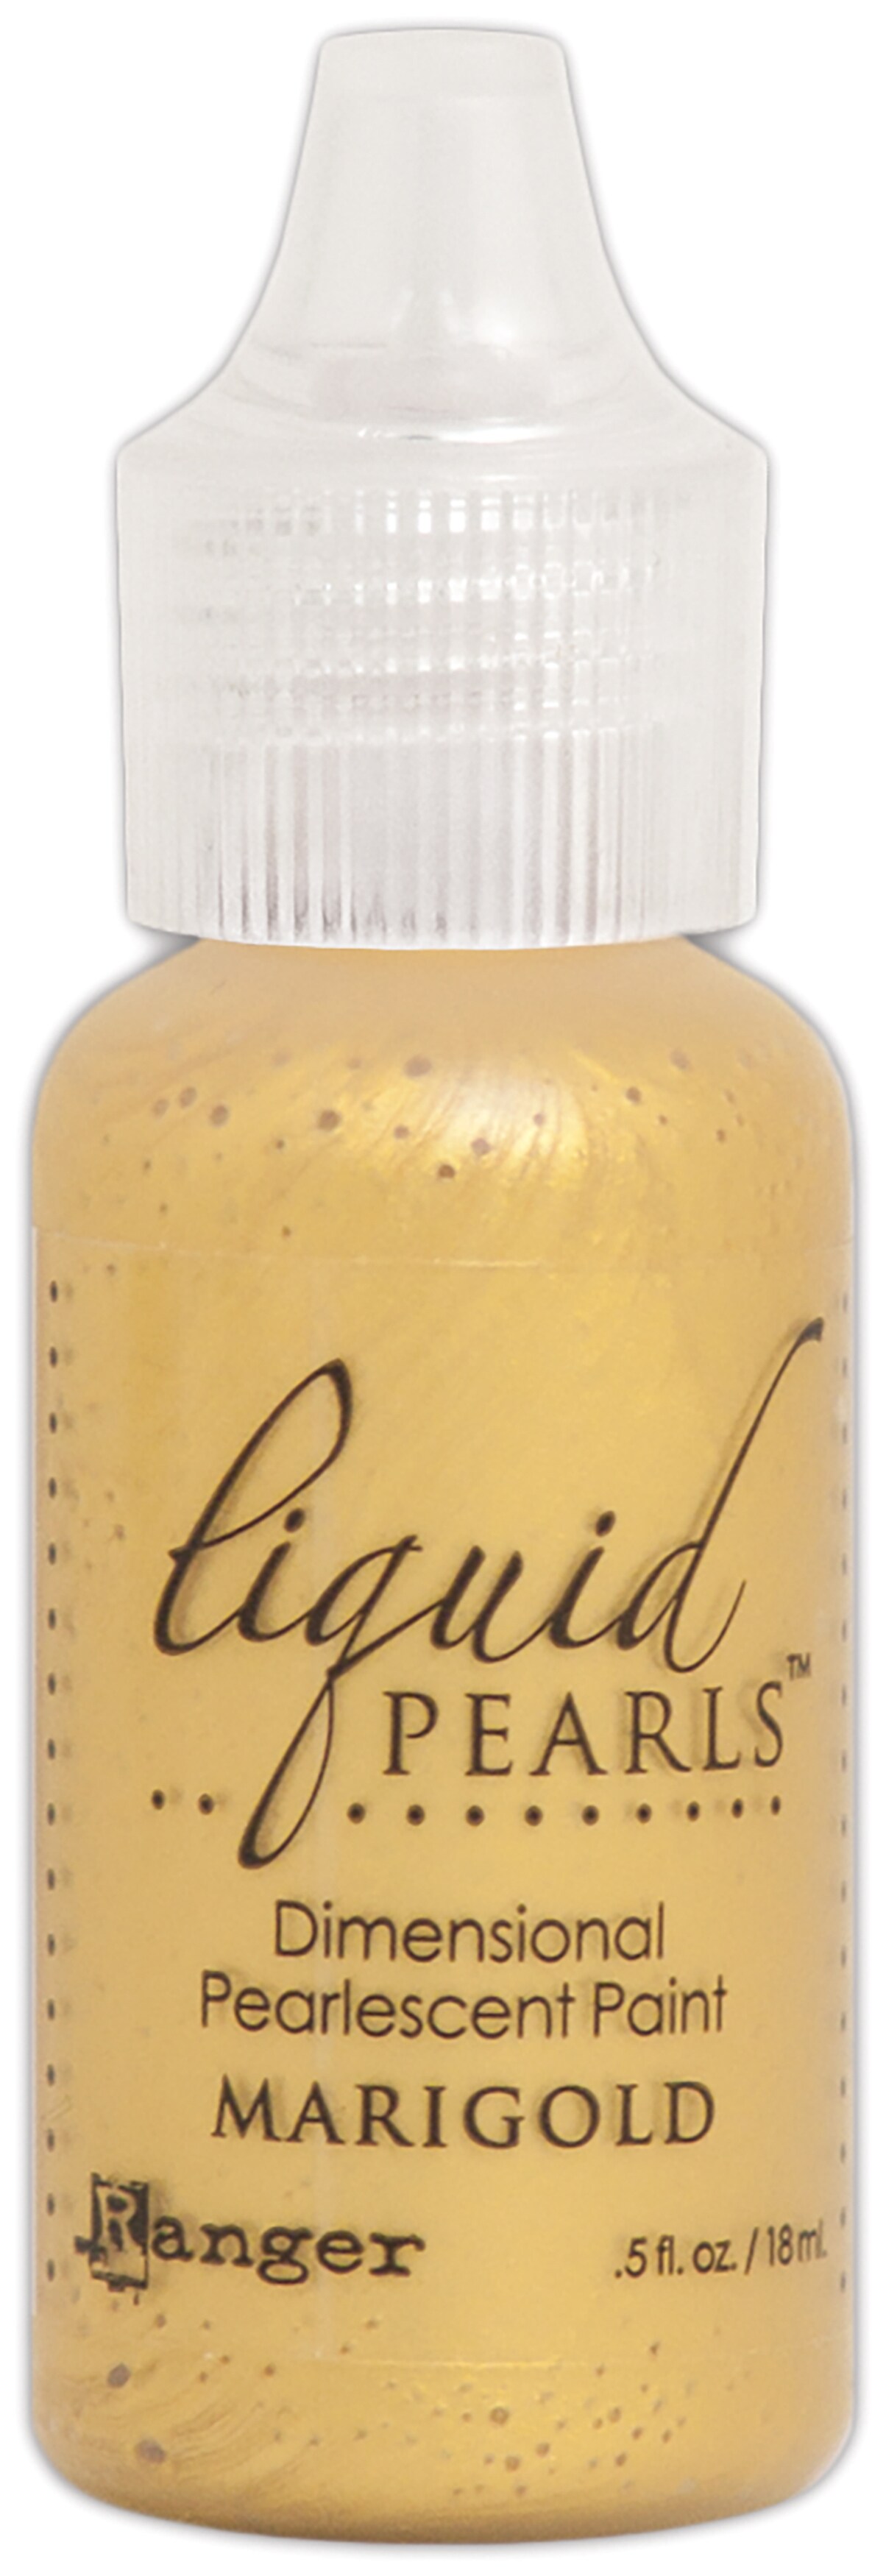 Liquid Pearls Dimensional Pearlescent Paint .5oz (Gold Pearl), Ranger